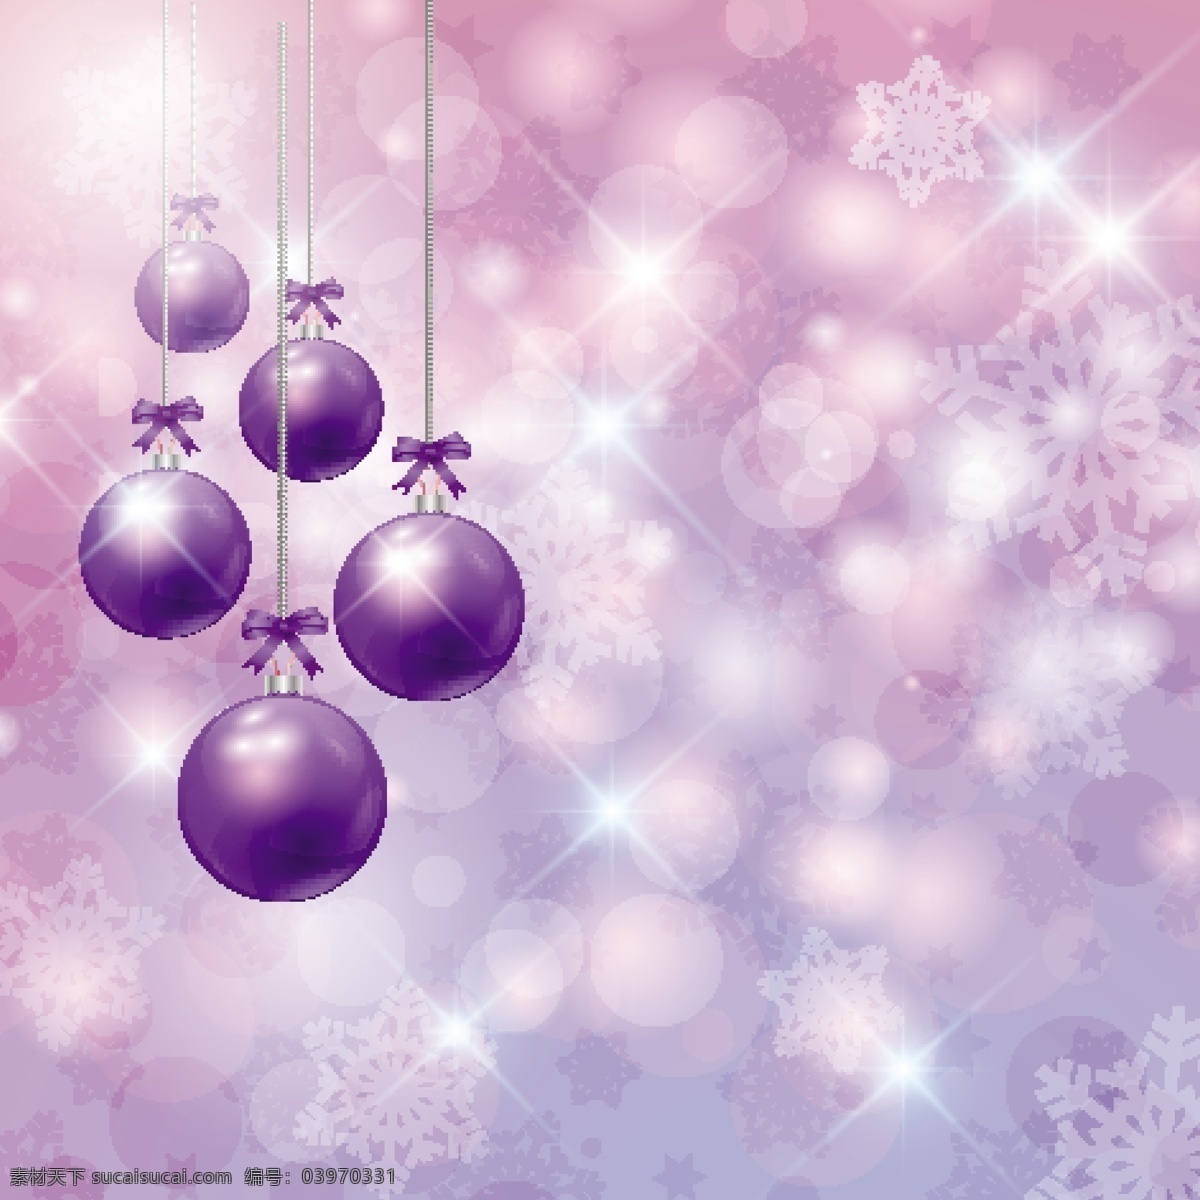 christmas bokeh background with purple baubles 背景 圣诞节 抽象的 光 雪 圣诞快乐 冬天 庆祝 雪花 节日 紫色的球 灯光 背景虚化 节日快乐 粉色